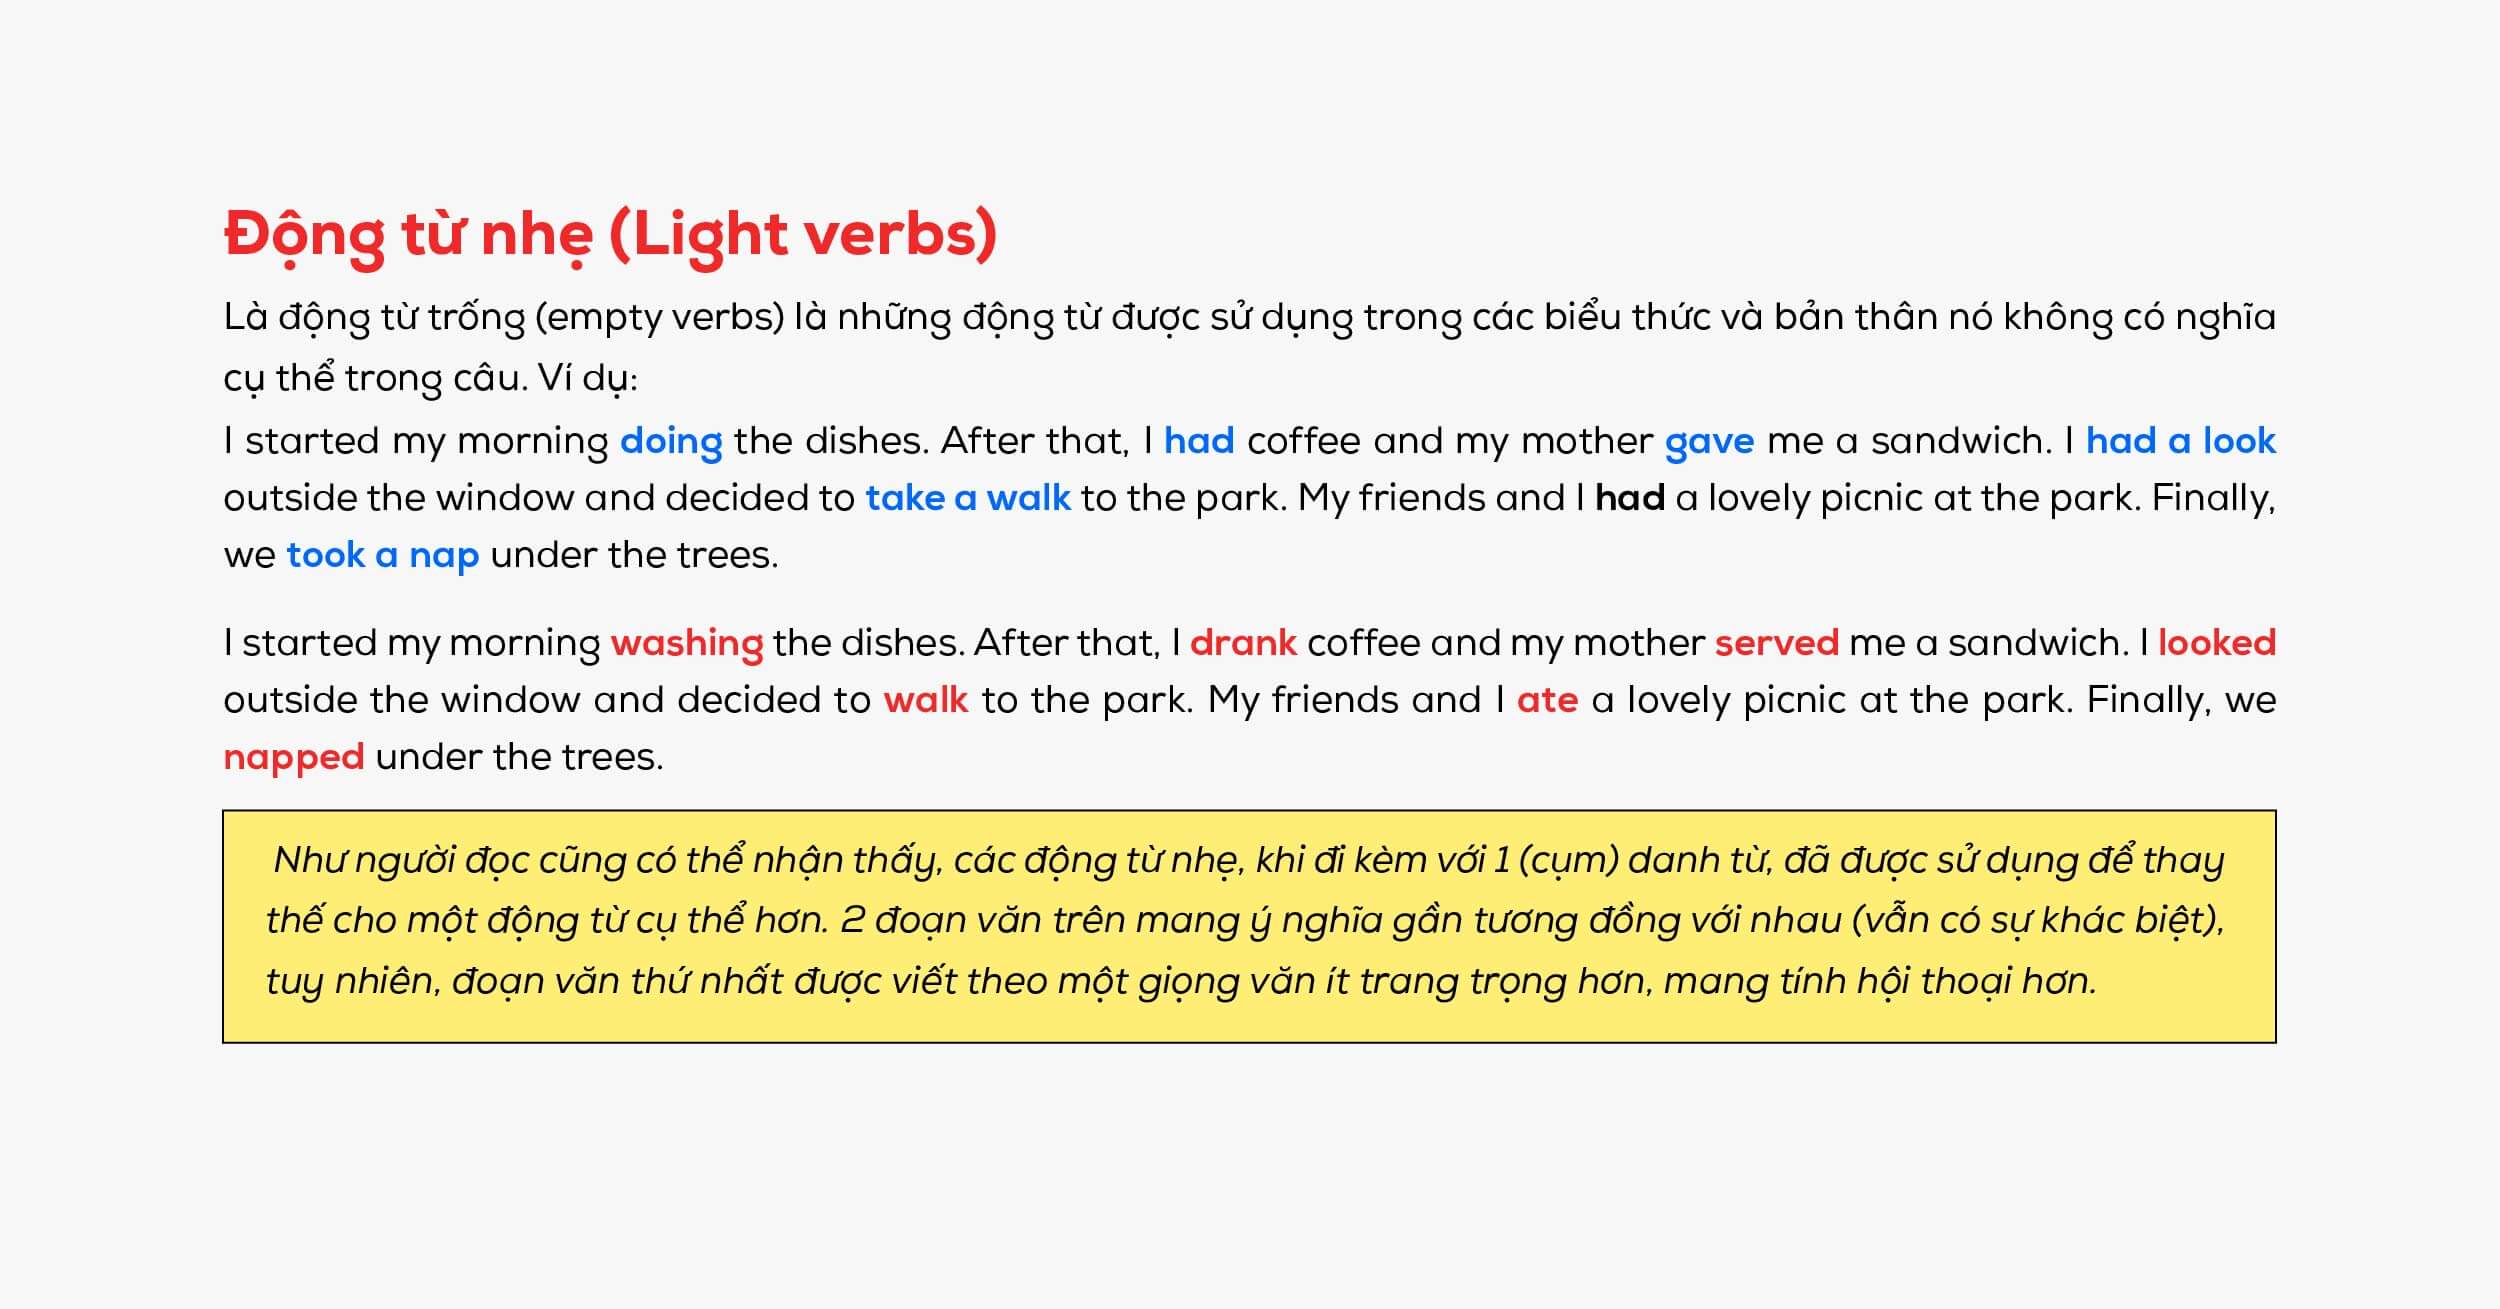 dong-tu-nhe-light-verbs-la-gi-cach-ap-dung-trong-ielts-writing